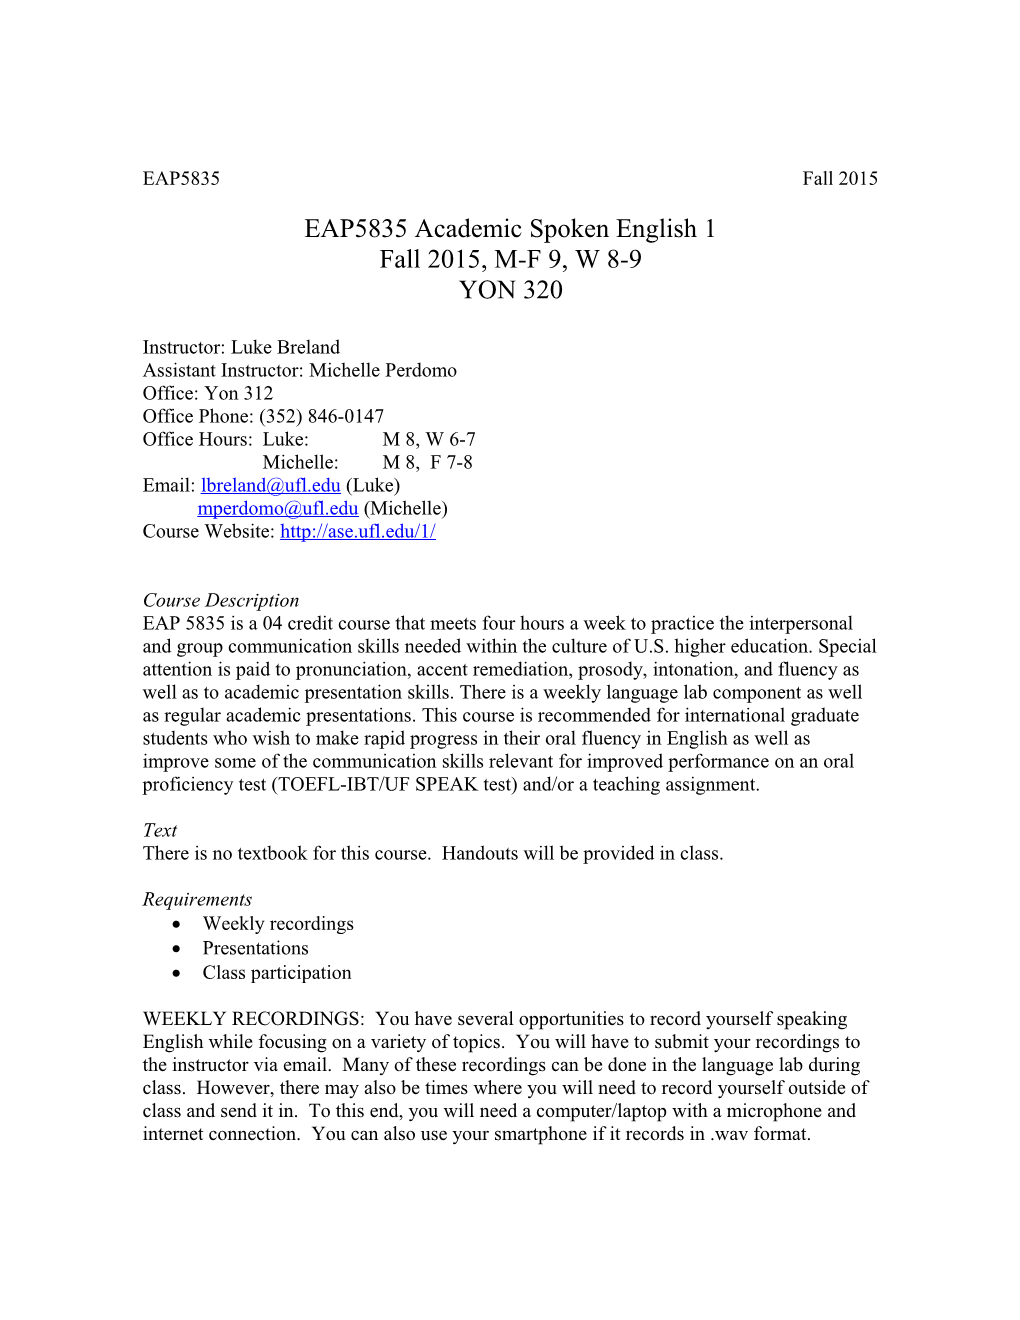 EAP5835 Academic Spoken English 1